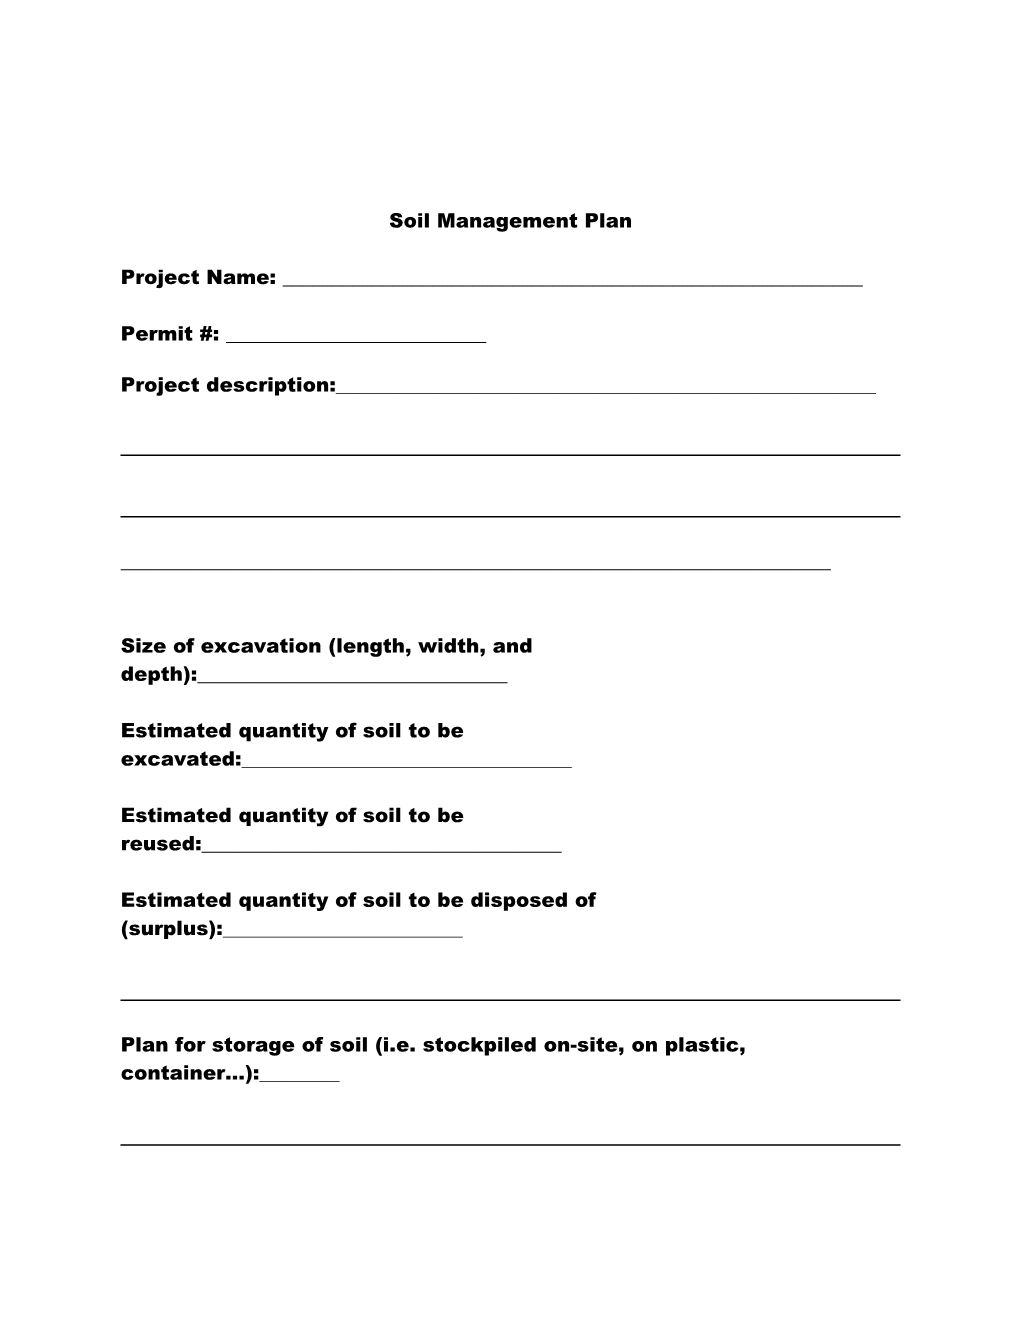 Soil Management Plan